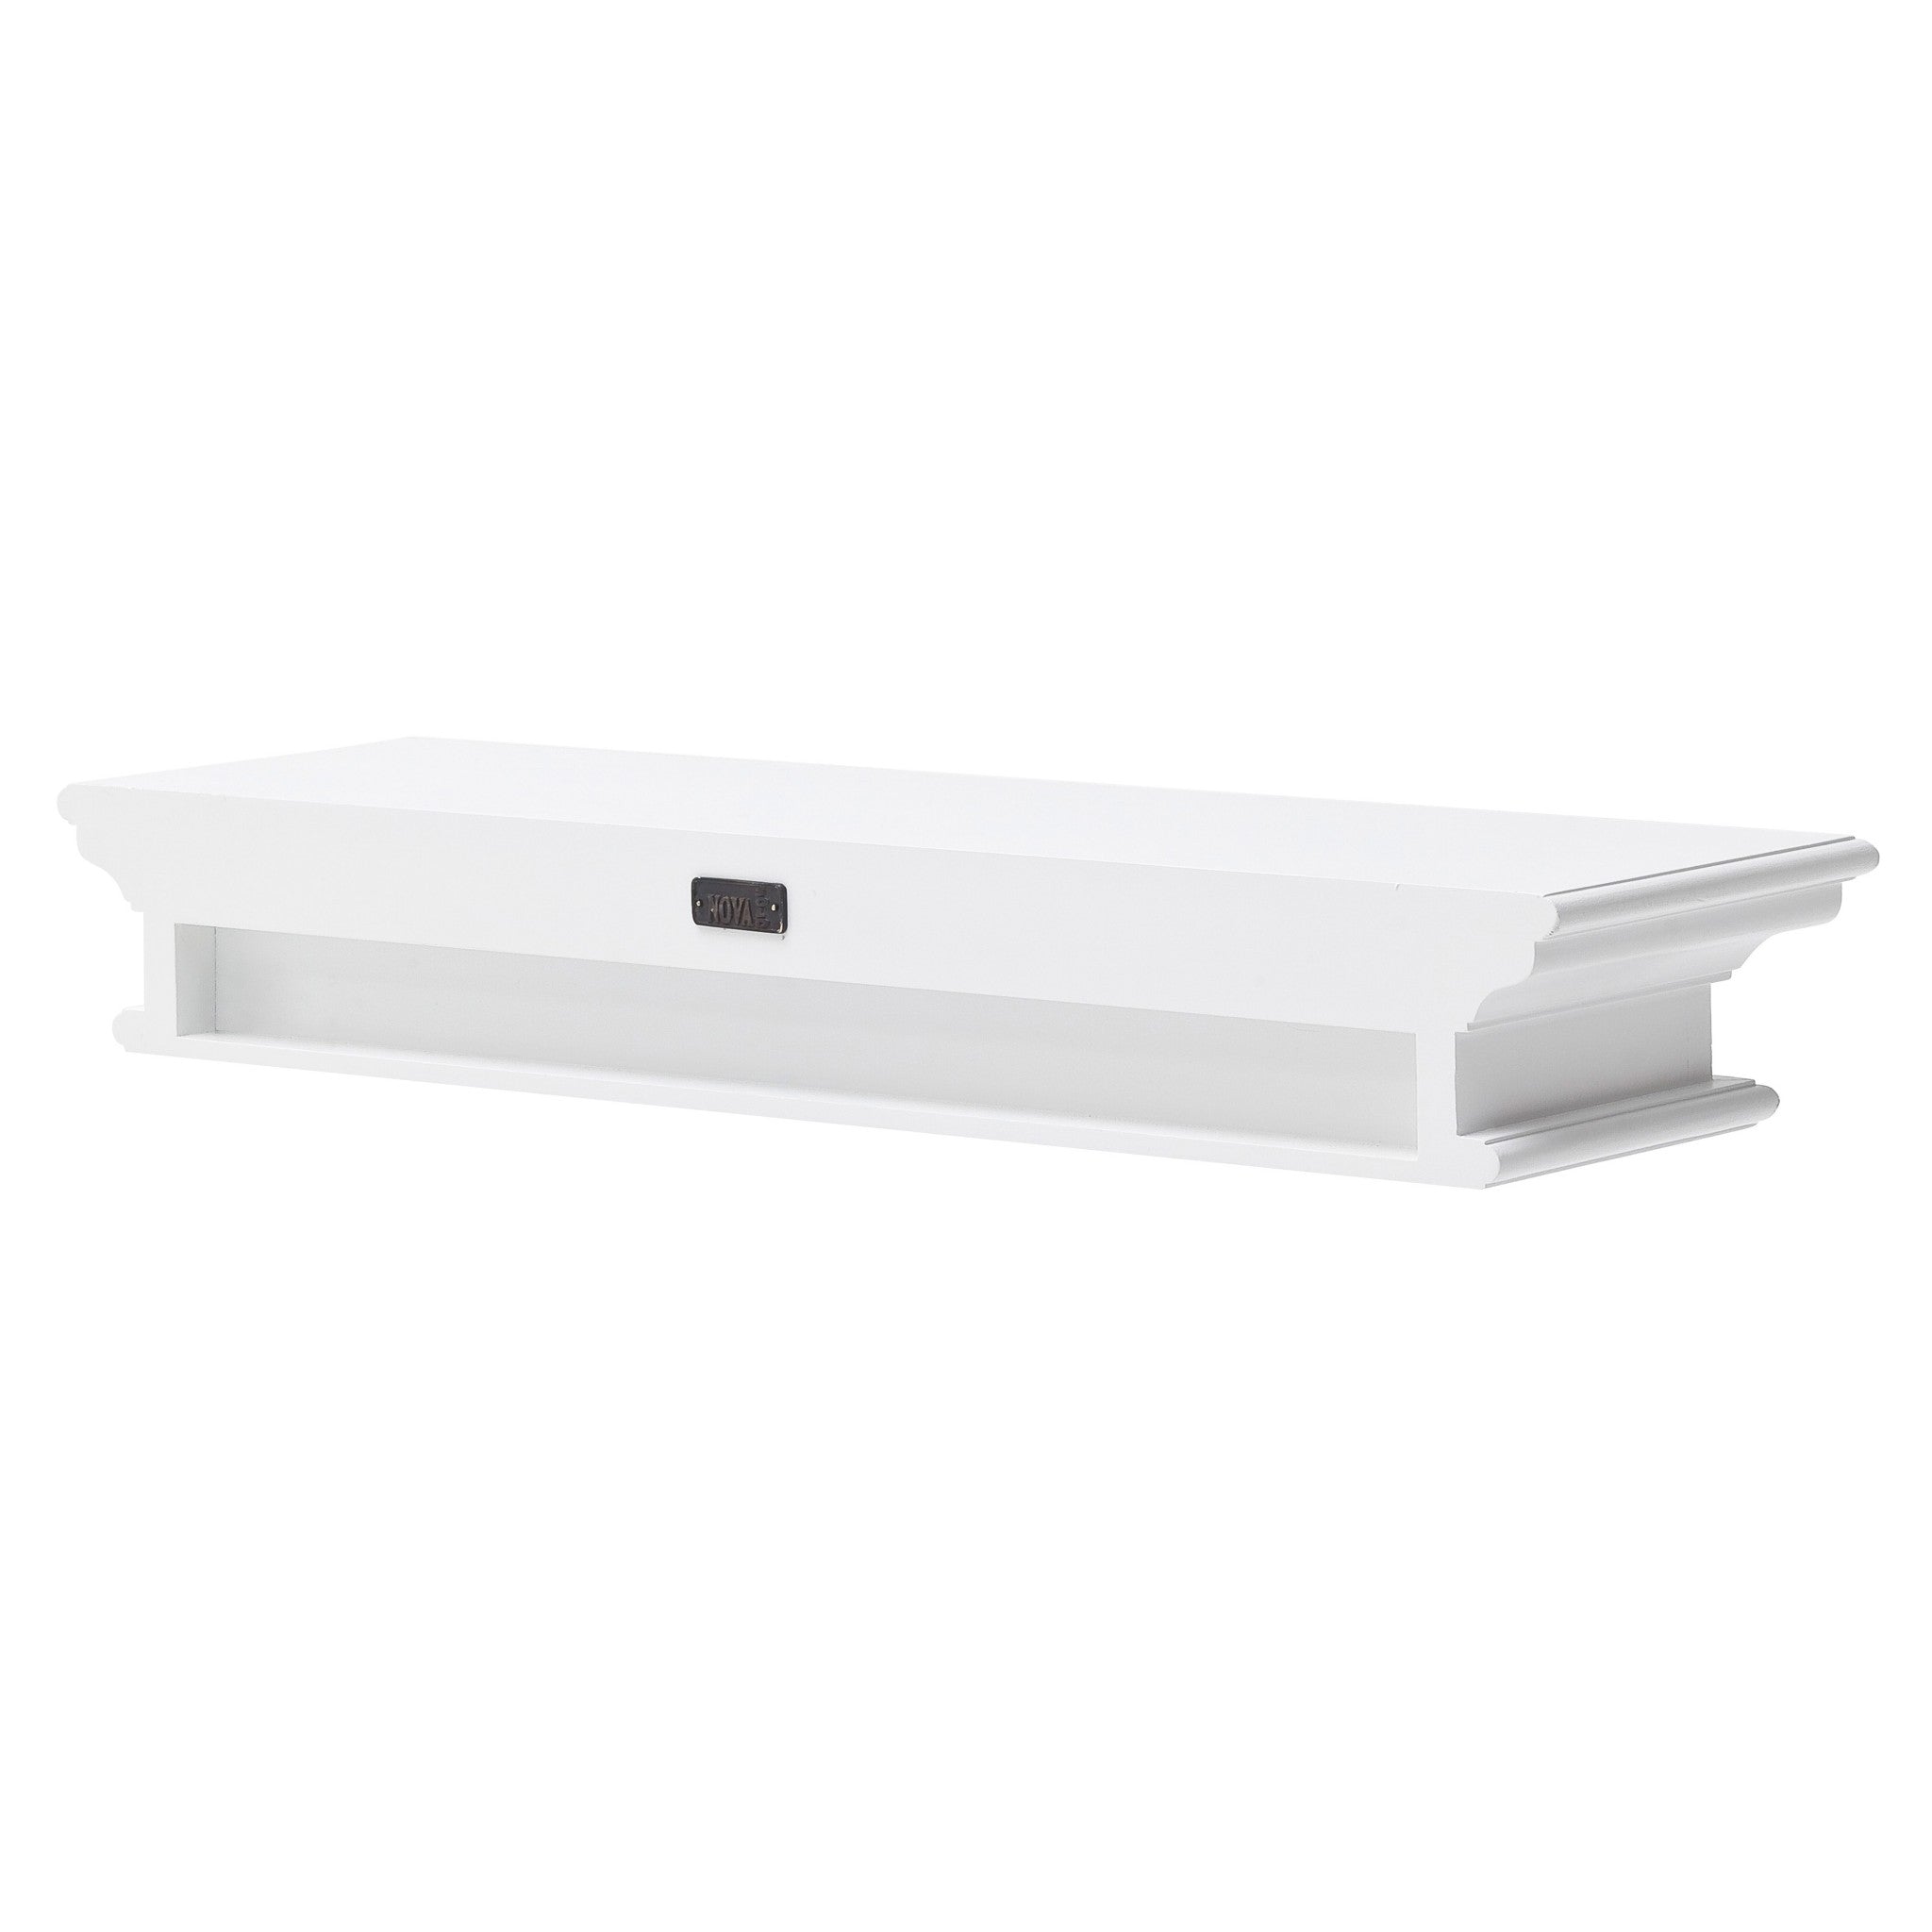 32" Classic White Floating Wall Shelf